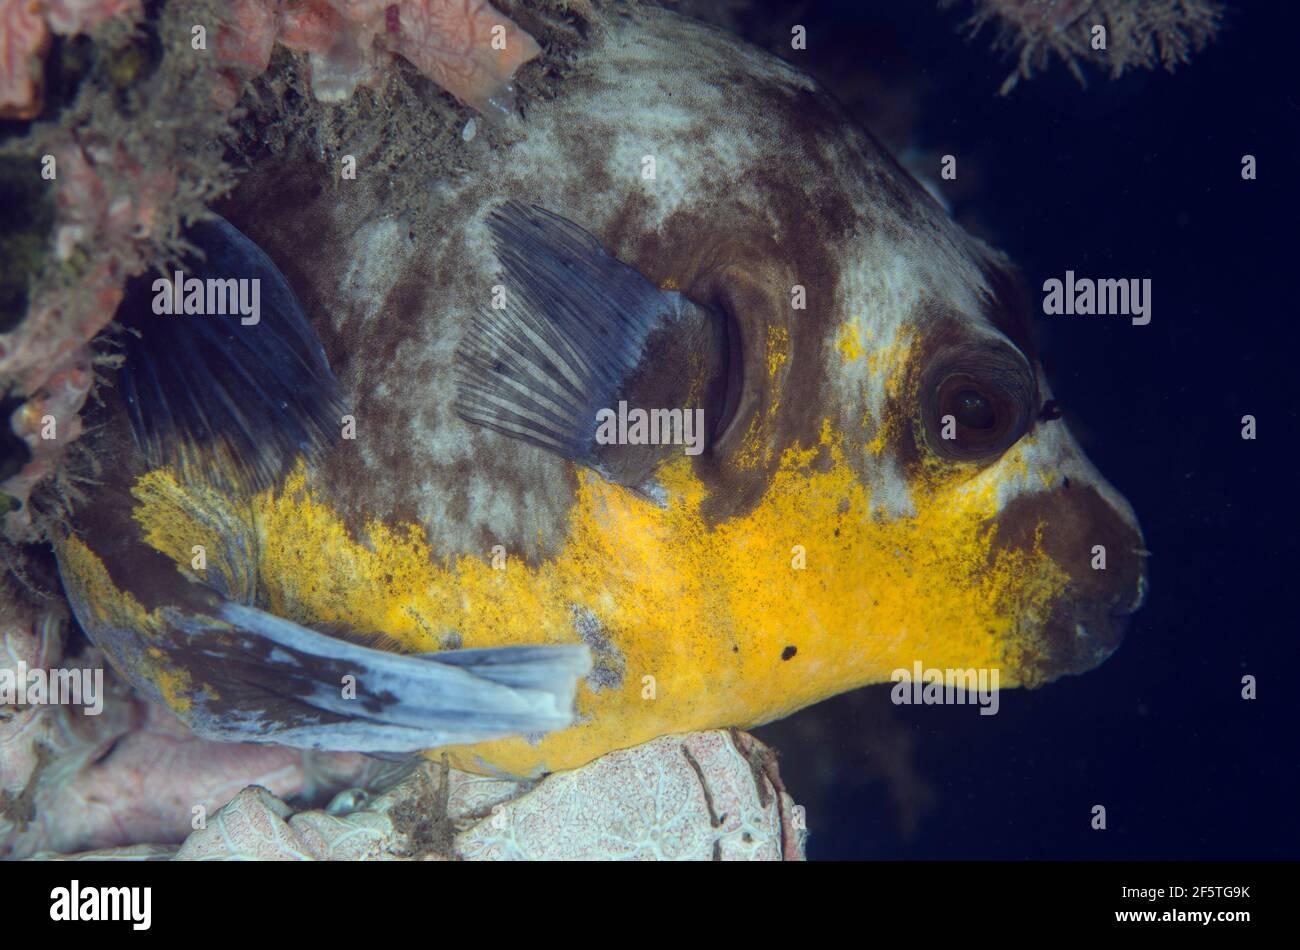 Blackspotted Puffer, Arothron nigropunctatus, Sagea Jetty dive site, Weda, Halmahera, North Maluku, Indonesia, Halmahera Sea Stock Photo